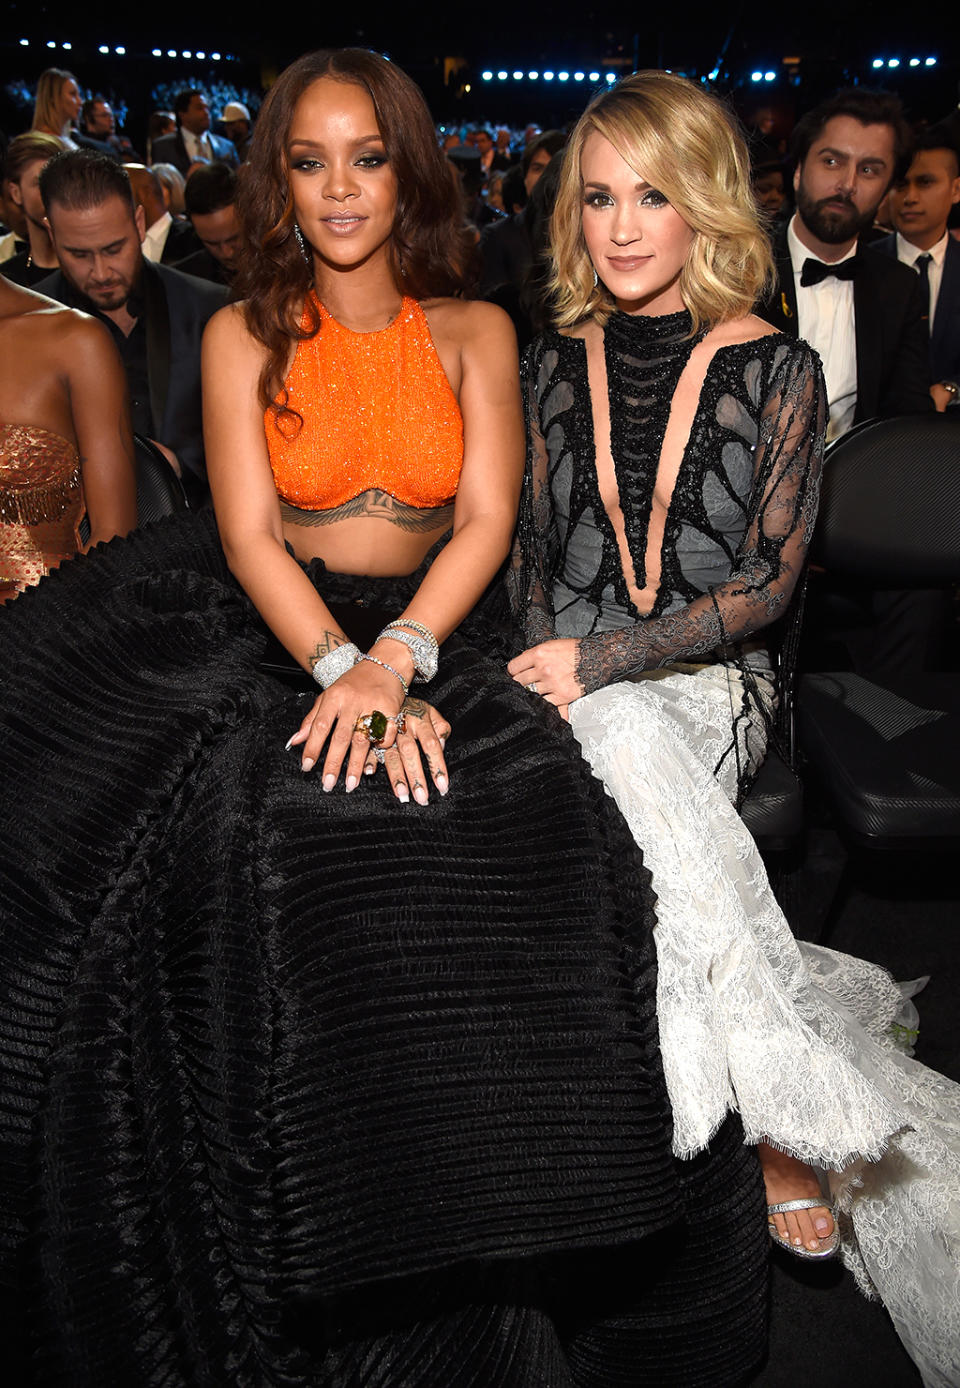 Rihanna and Carrie Underwood